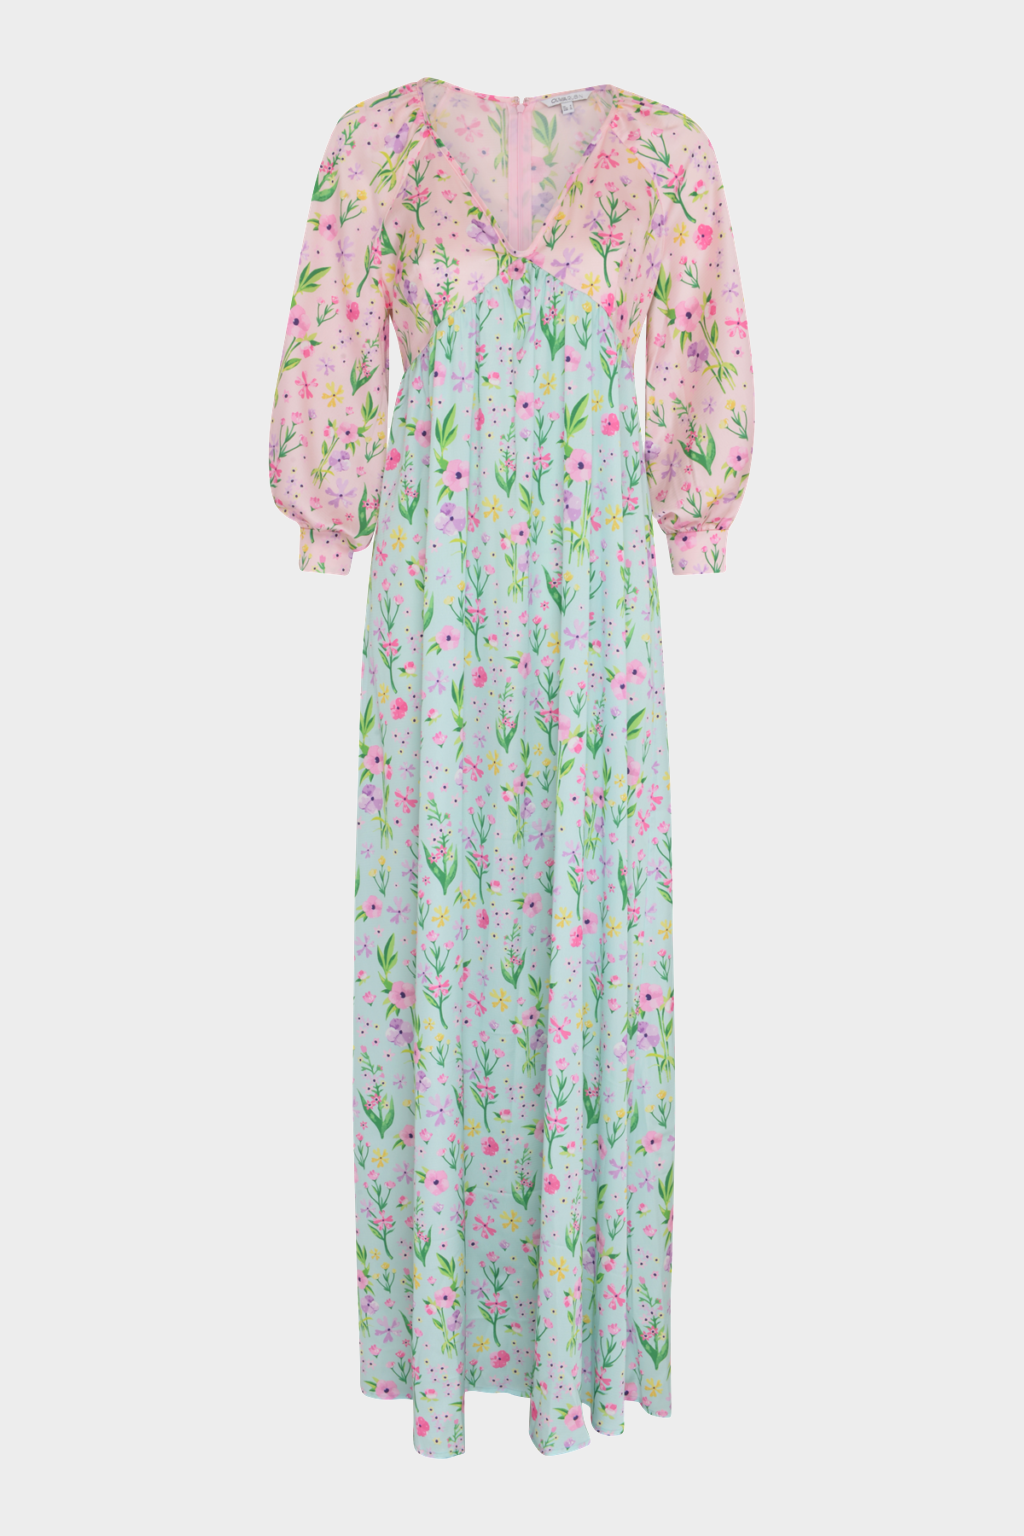 Olivia Rubin Blossom Maxi Dress